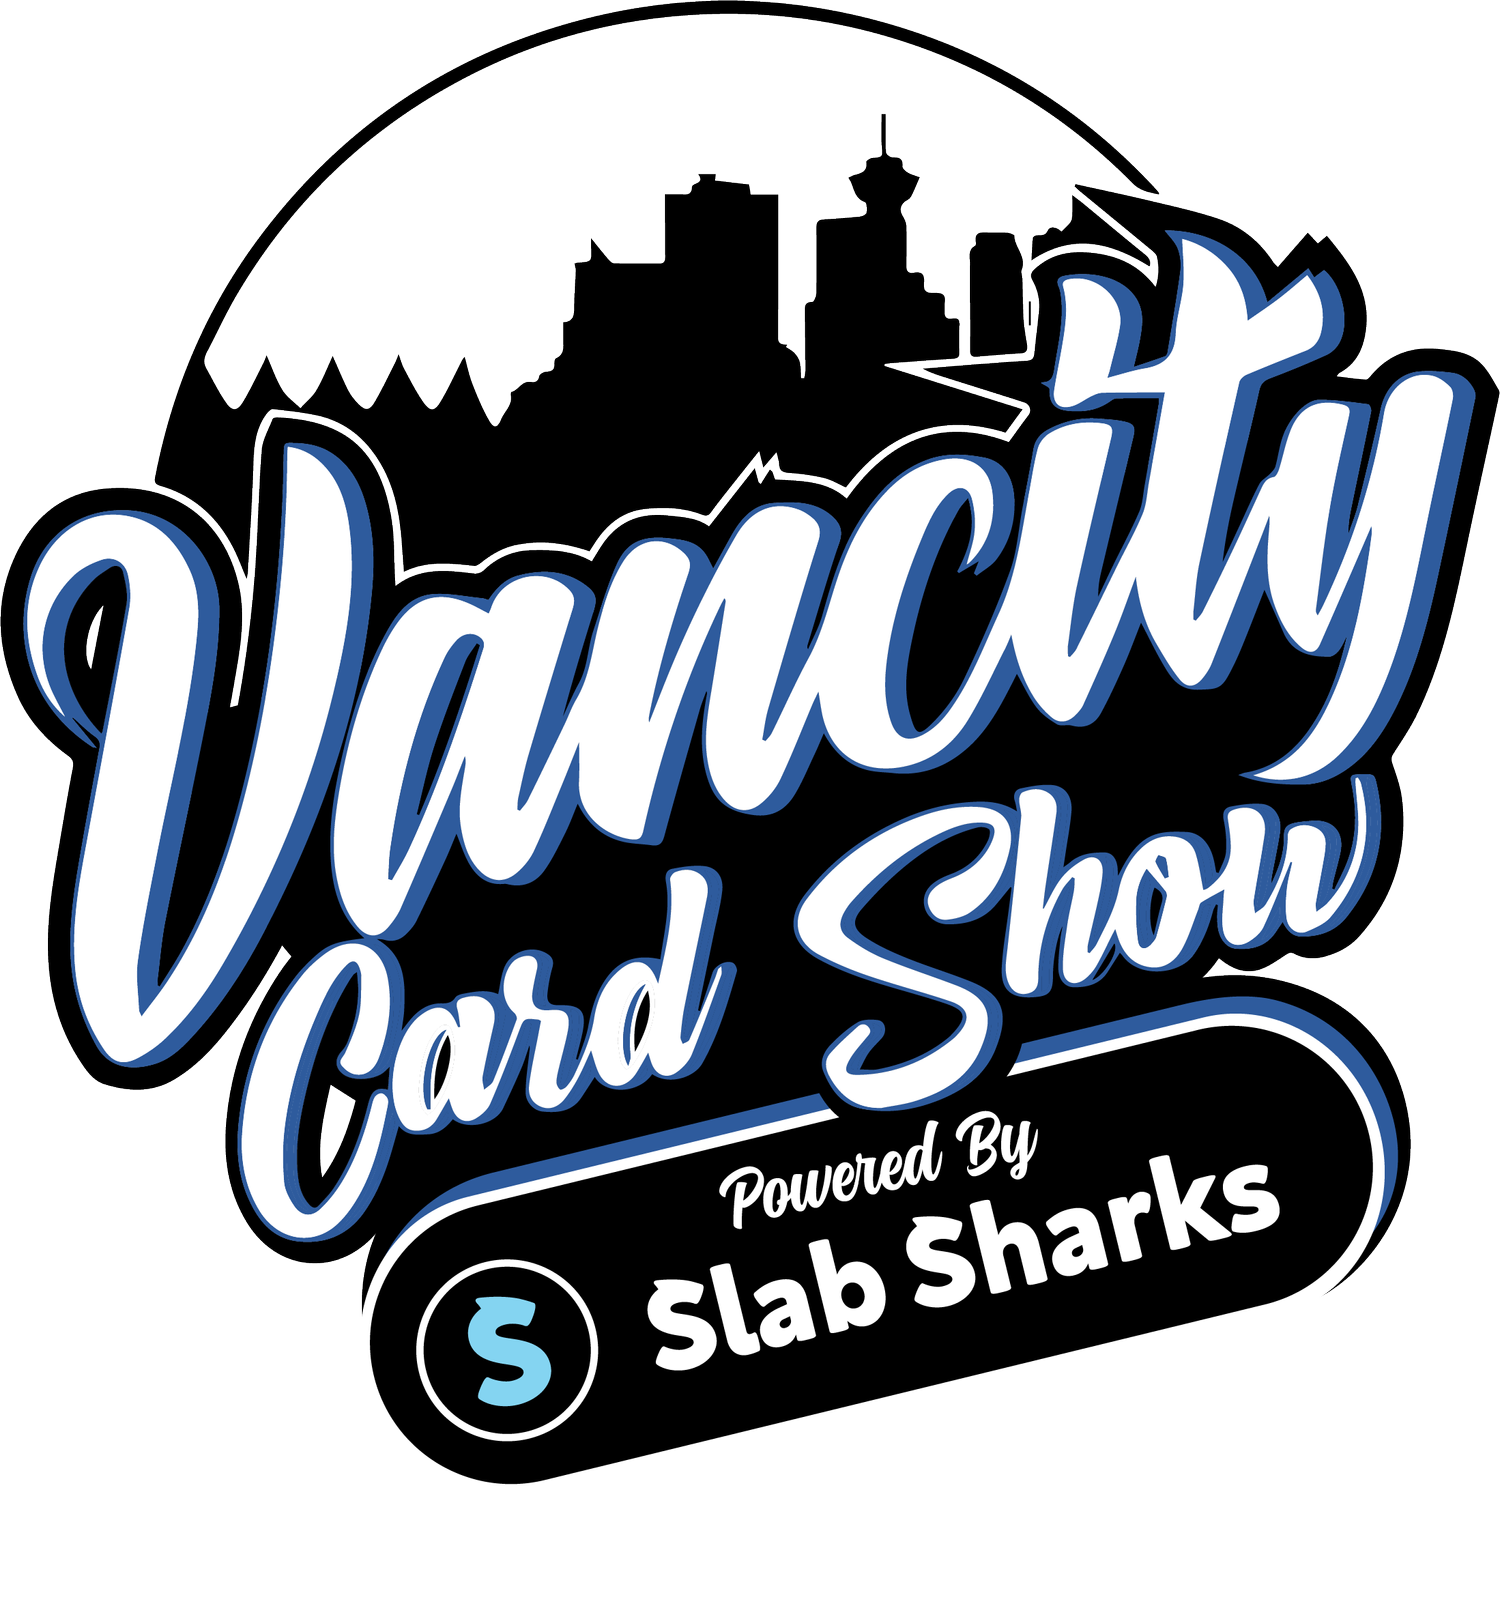 Vancity Card Show